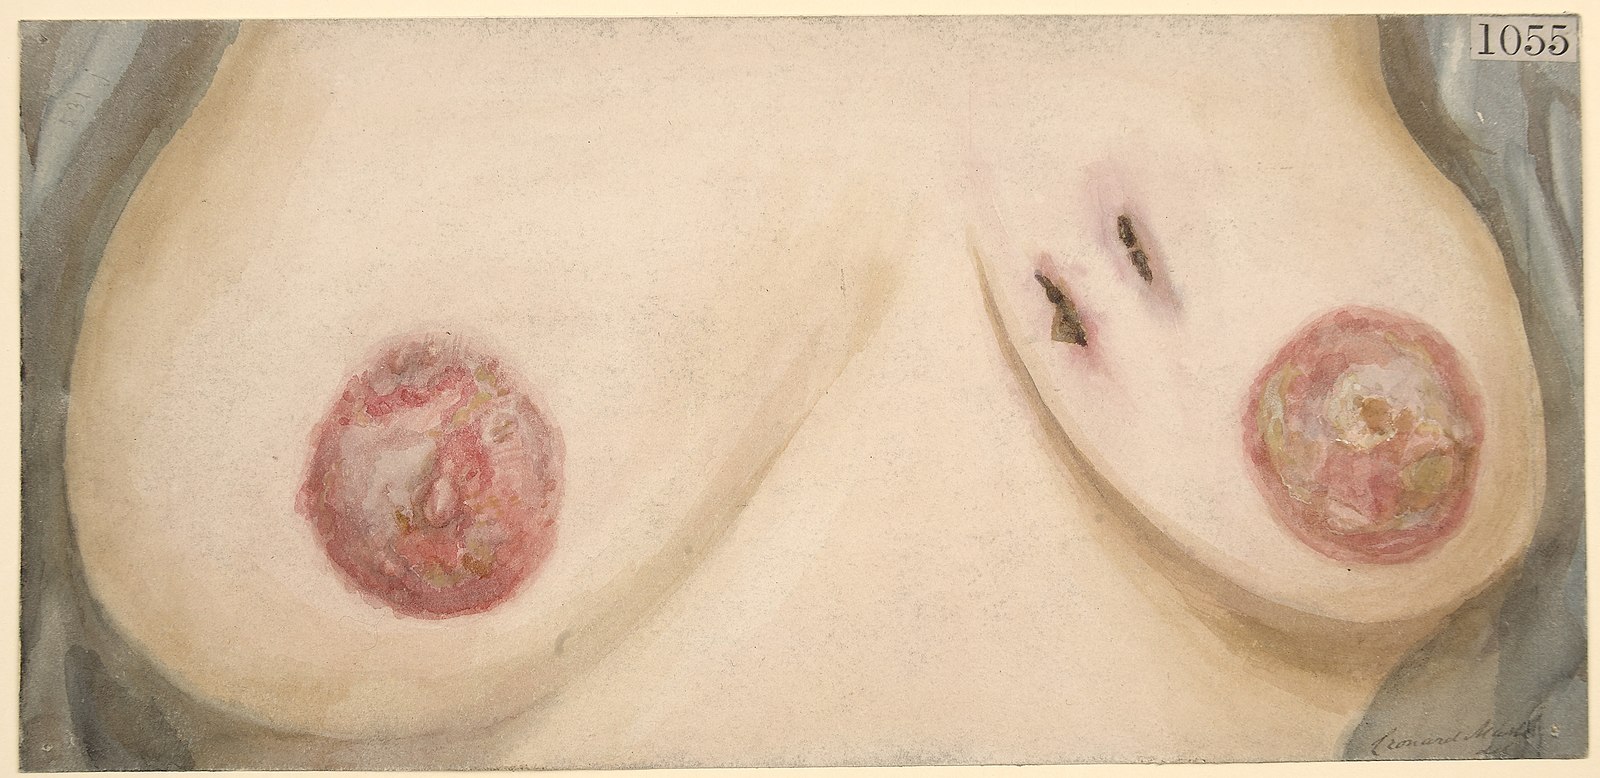 фурункул на груди у женщин фото 88